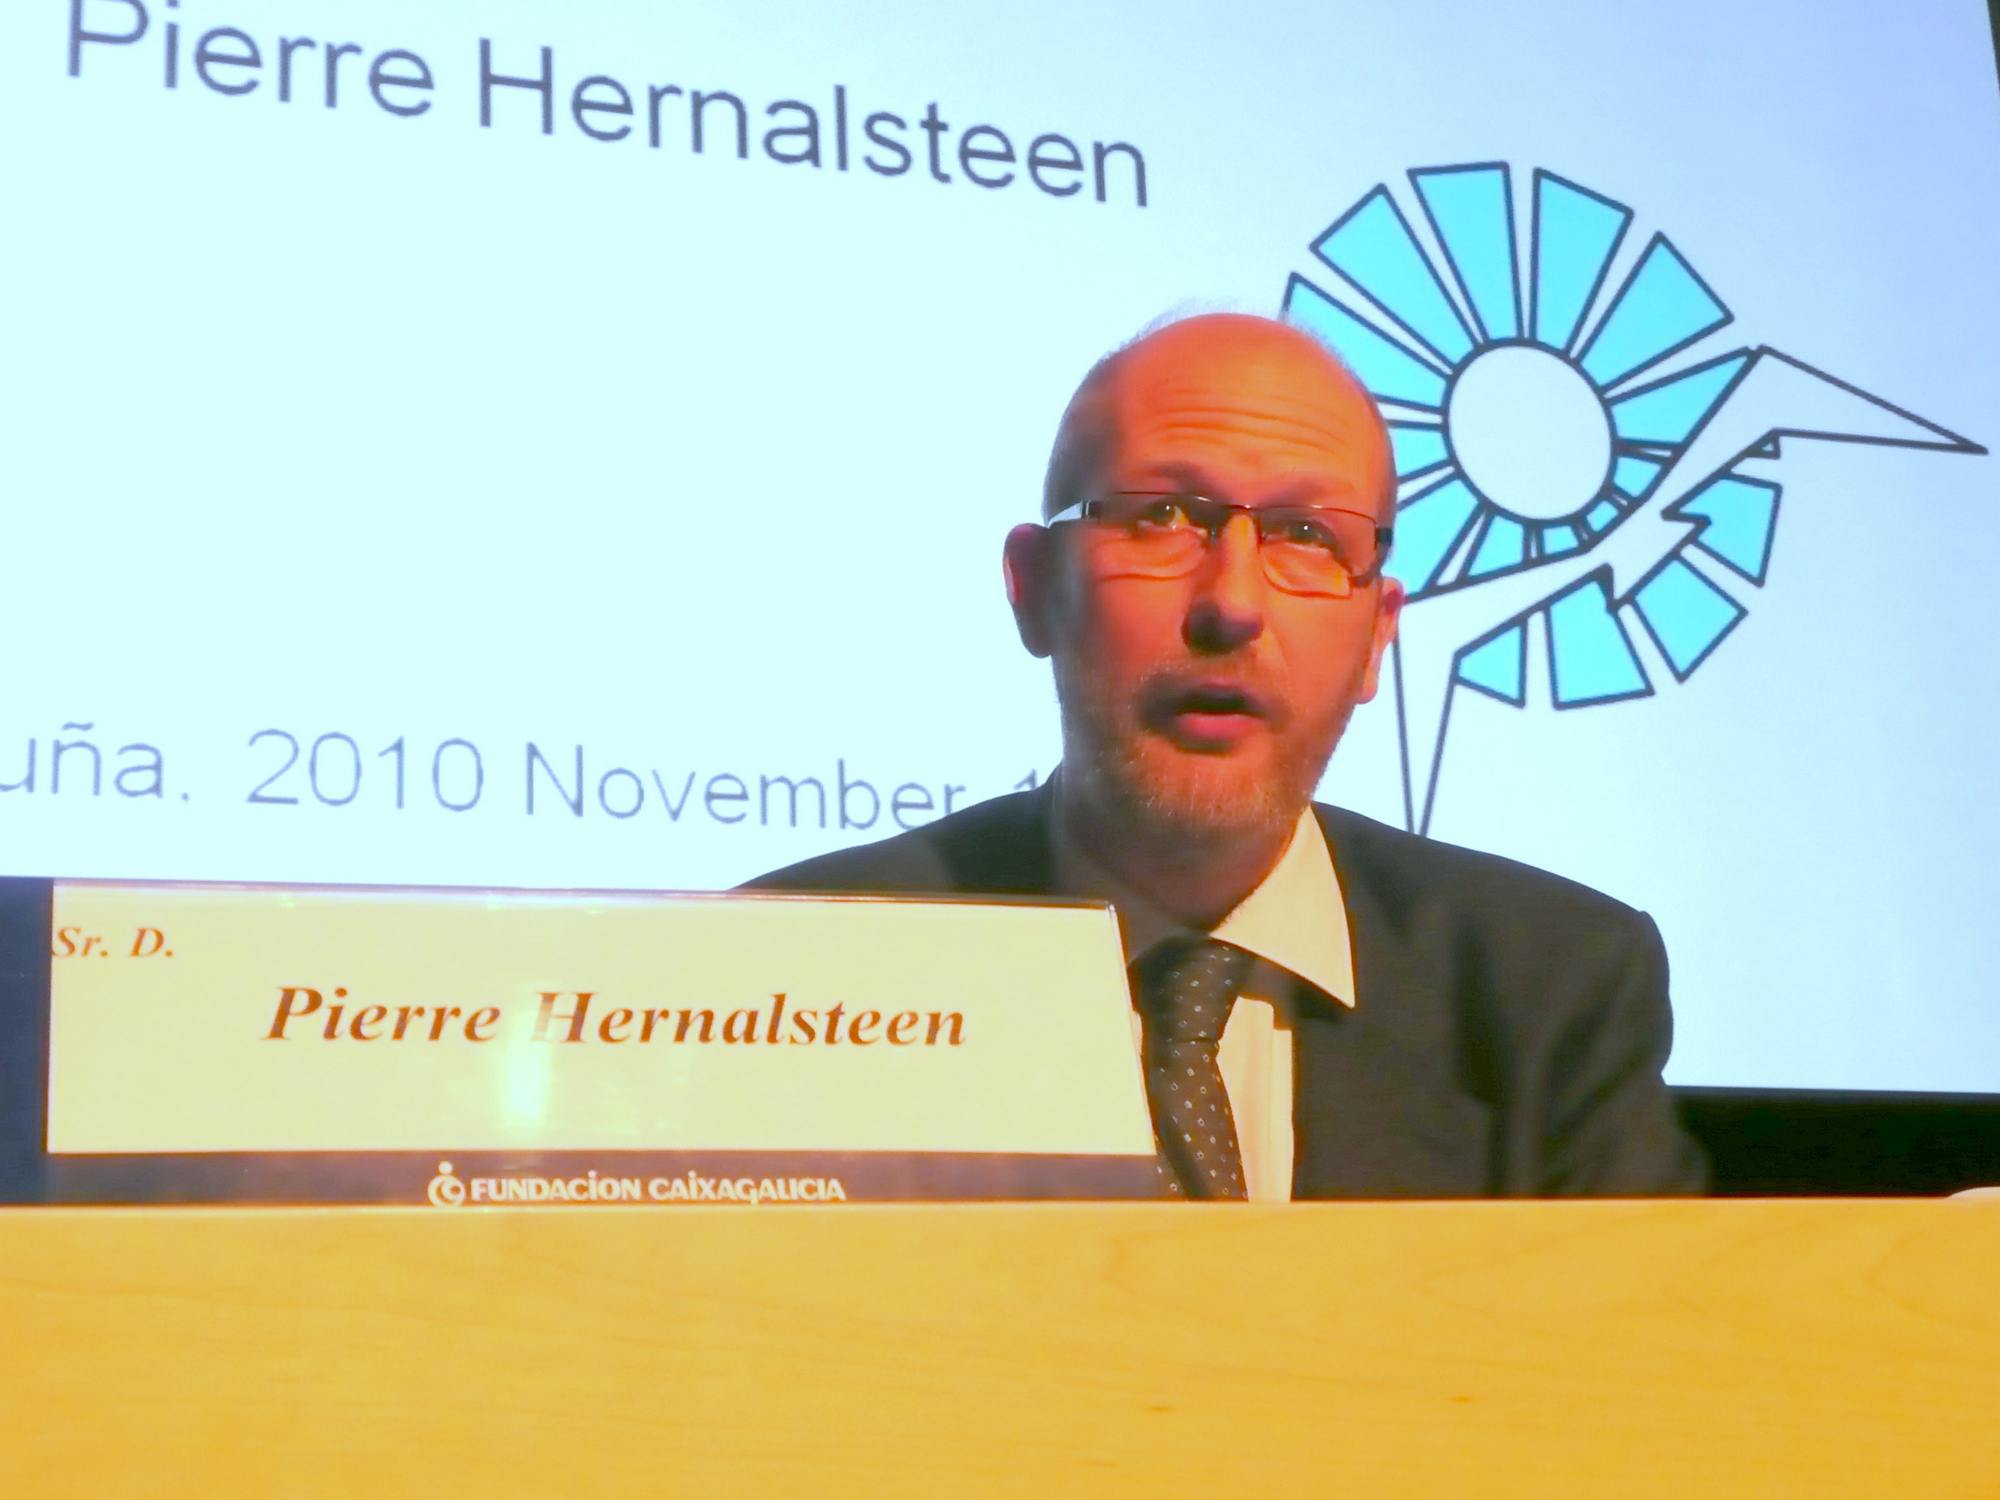 Pierre Hernalsteen during his presentation 2010